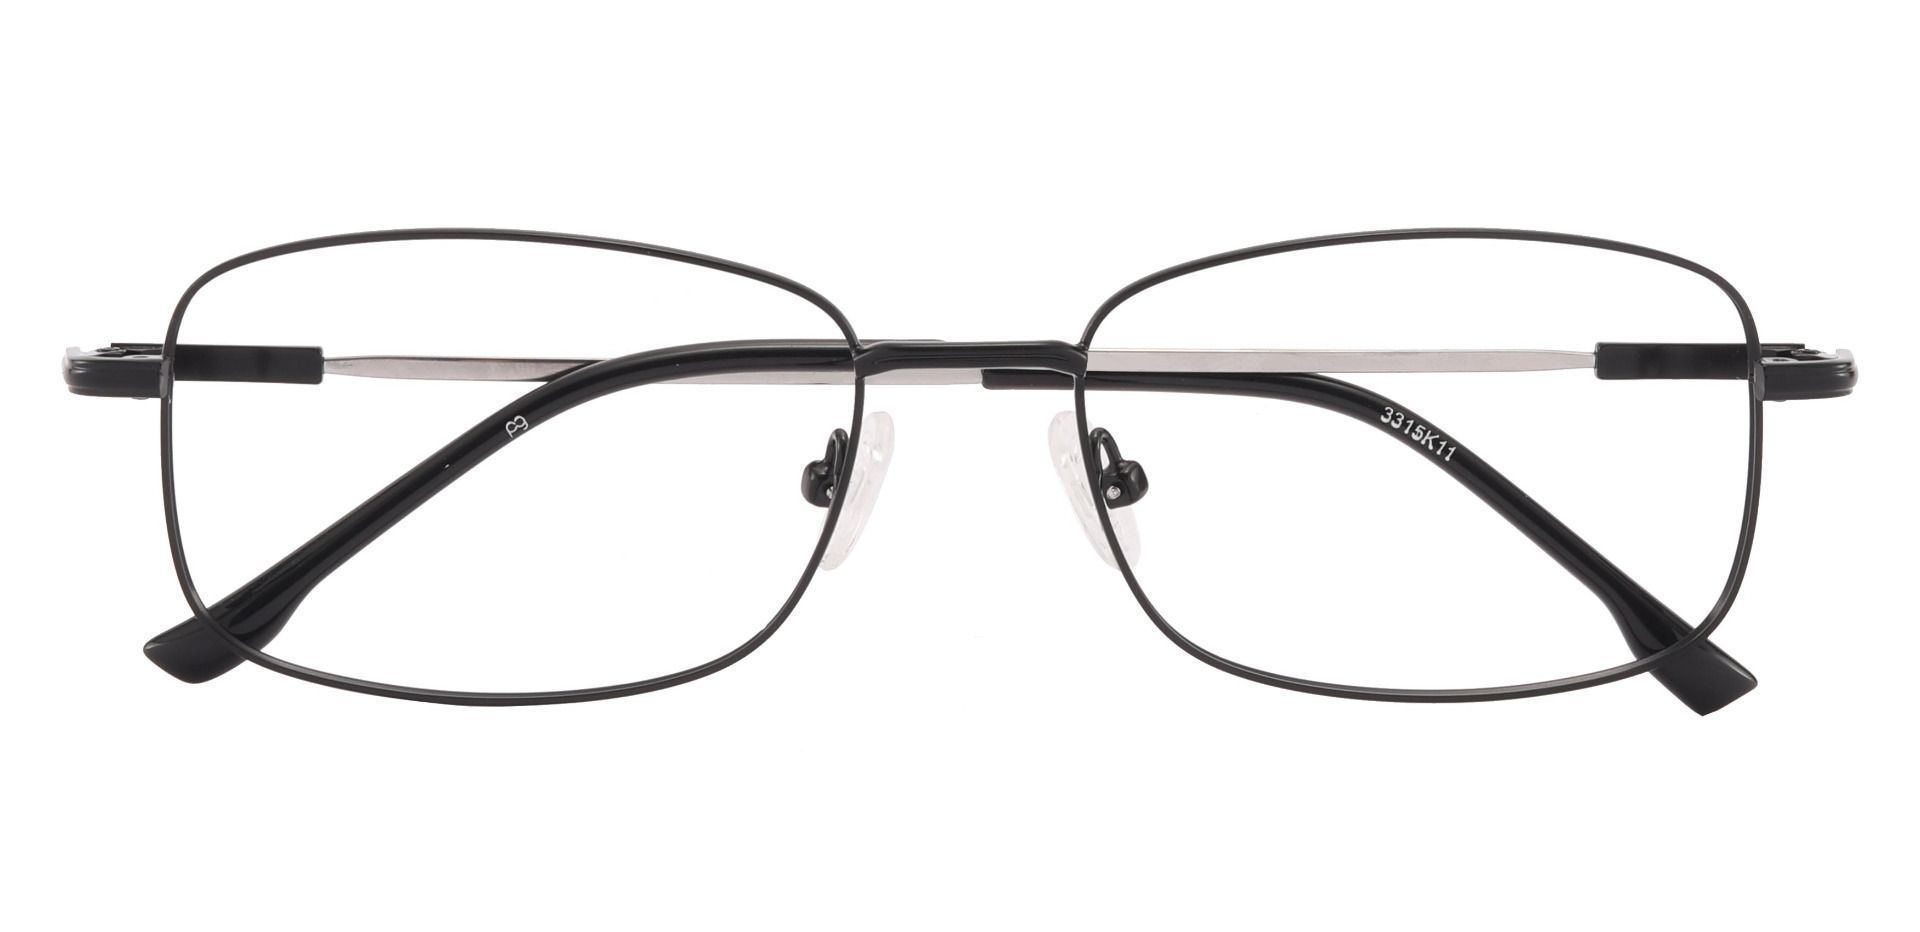 Turpin Rectangle Lined Bifocal Glasses - Black